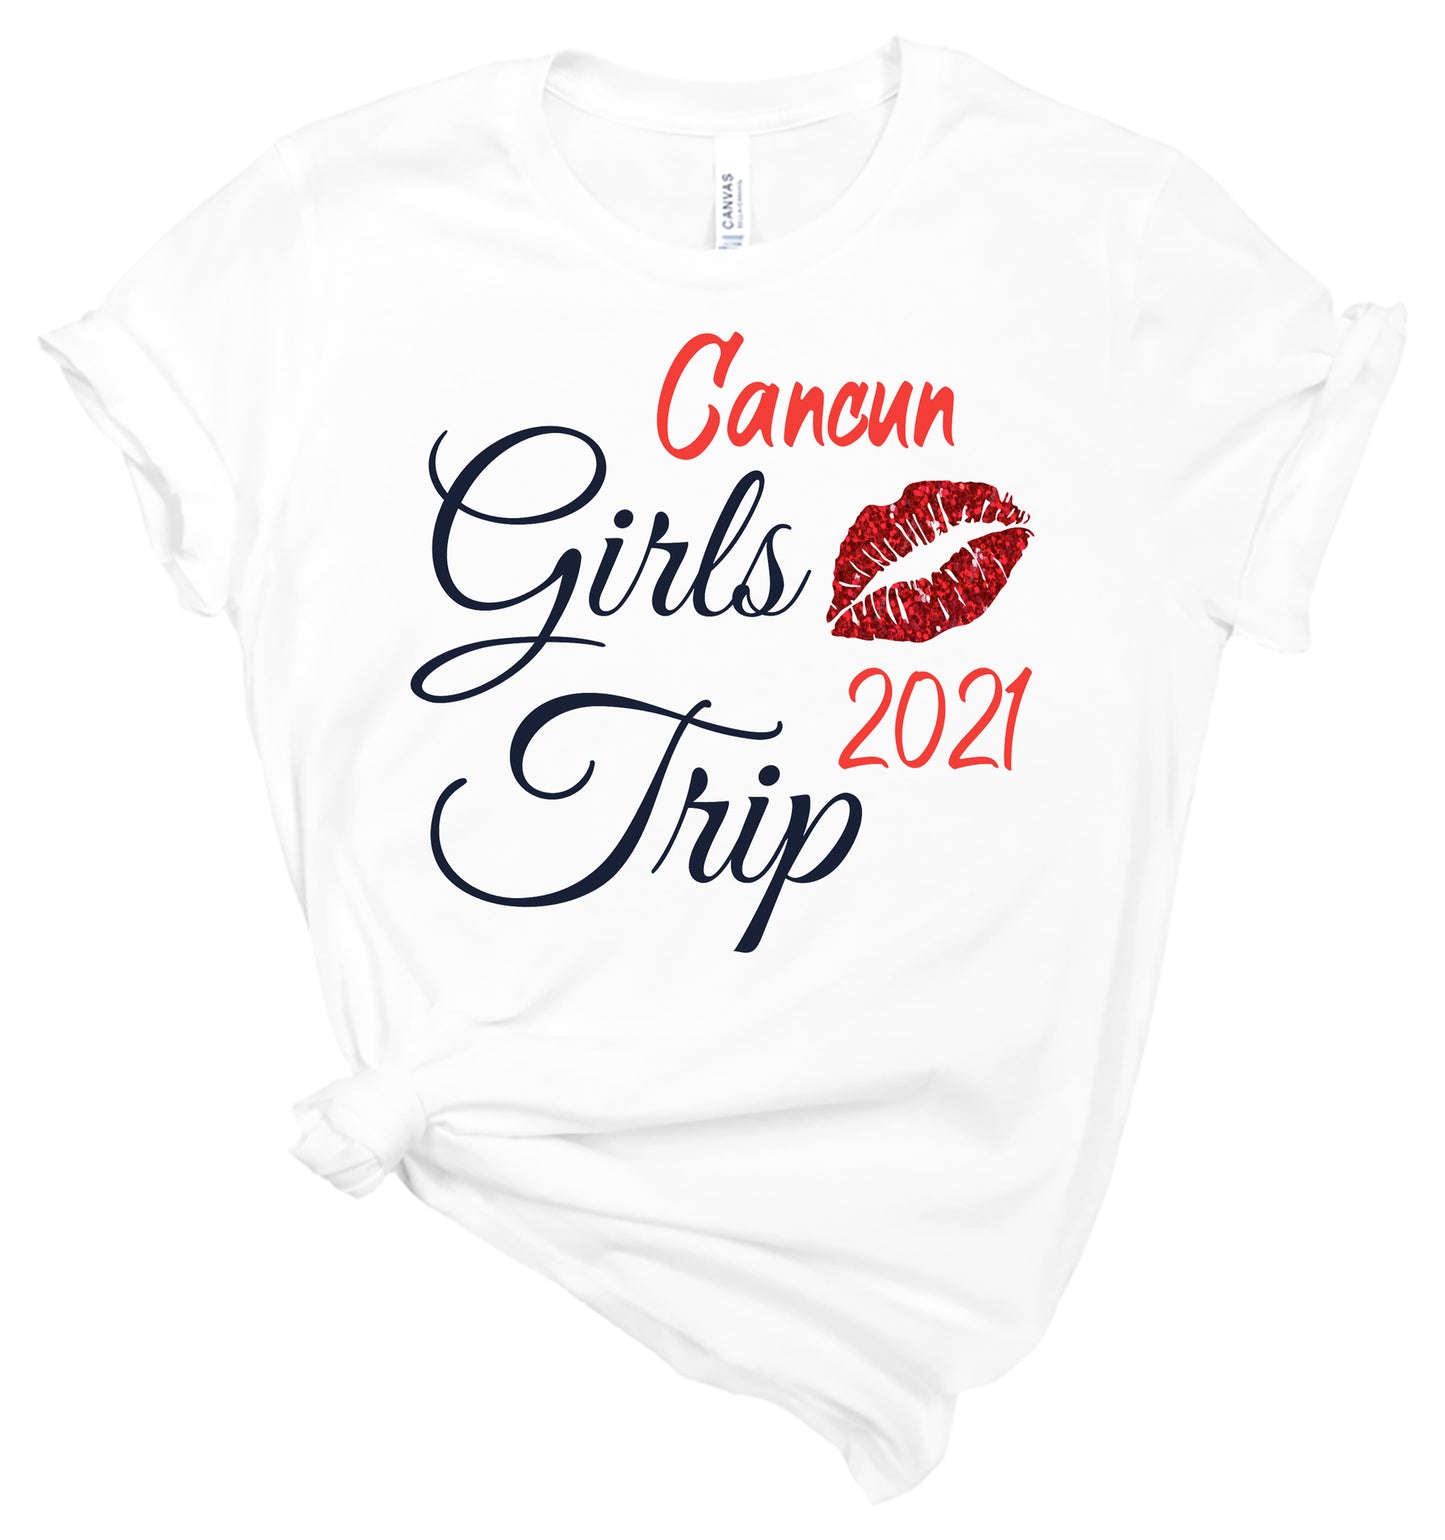 Girl's Trip T-Shirt